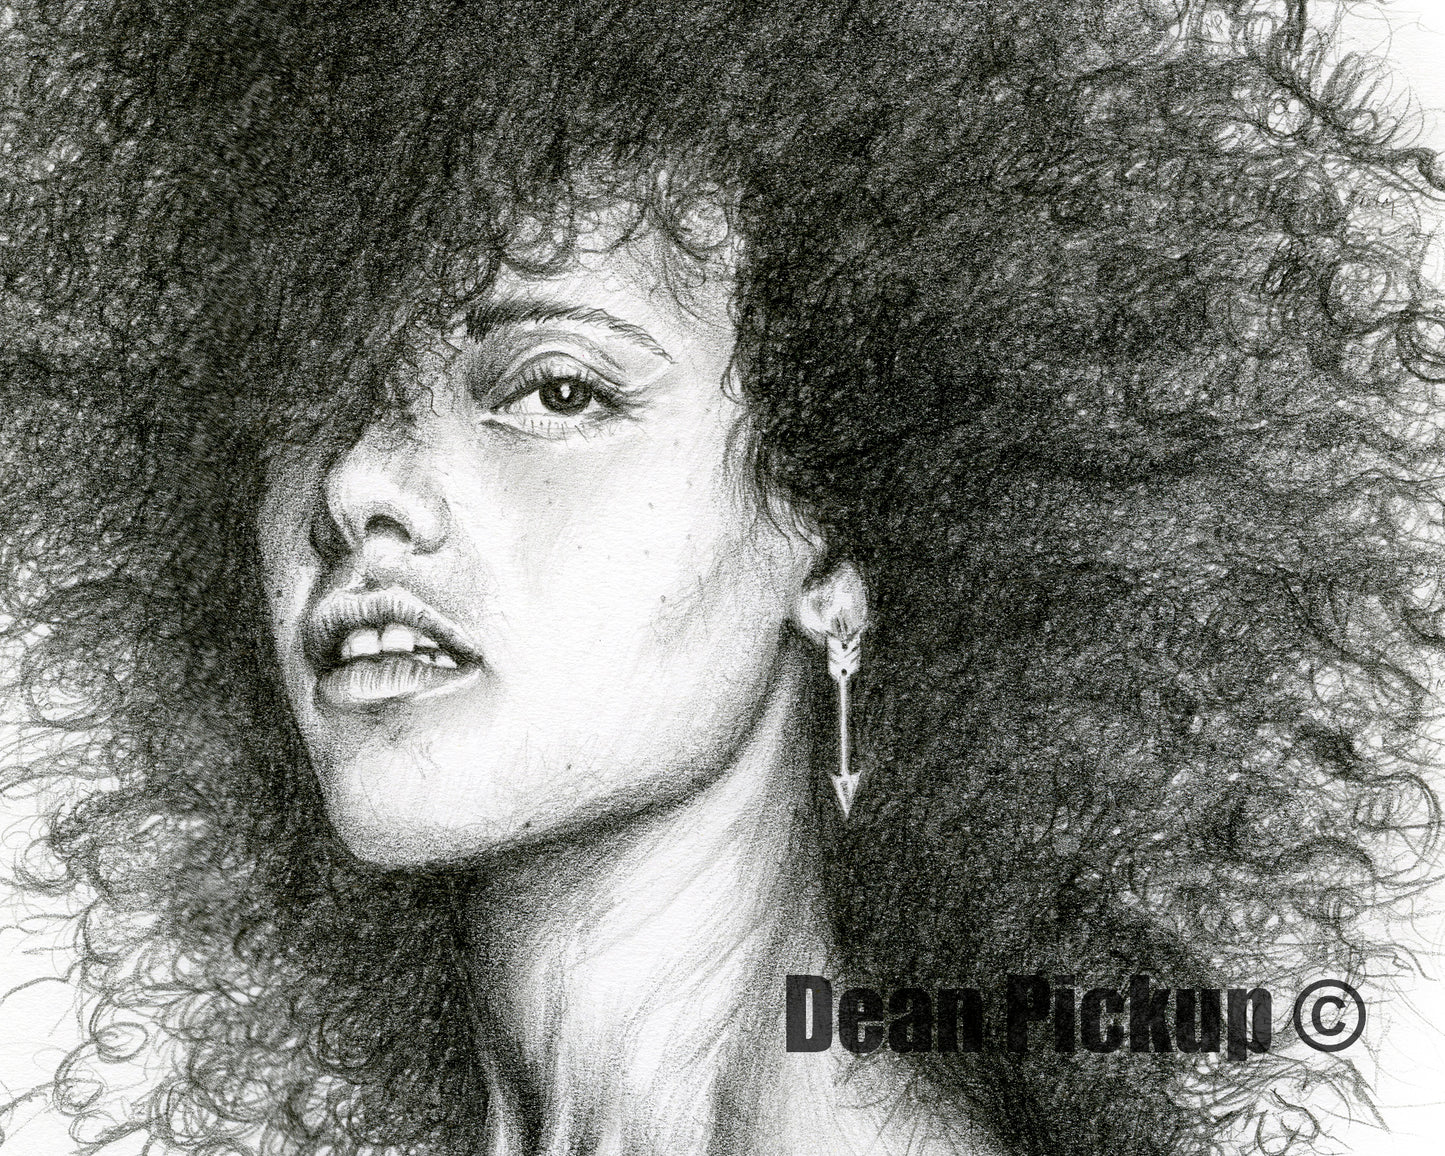 Alicia Keys, Fine Art Print - 11"x14"